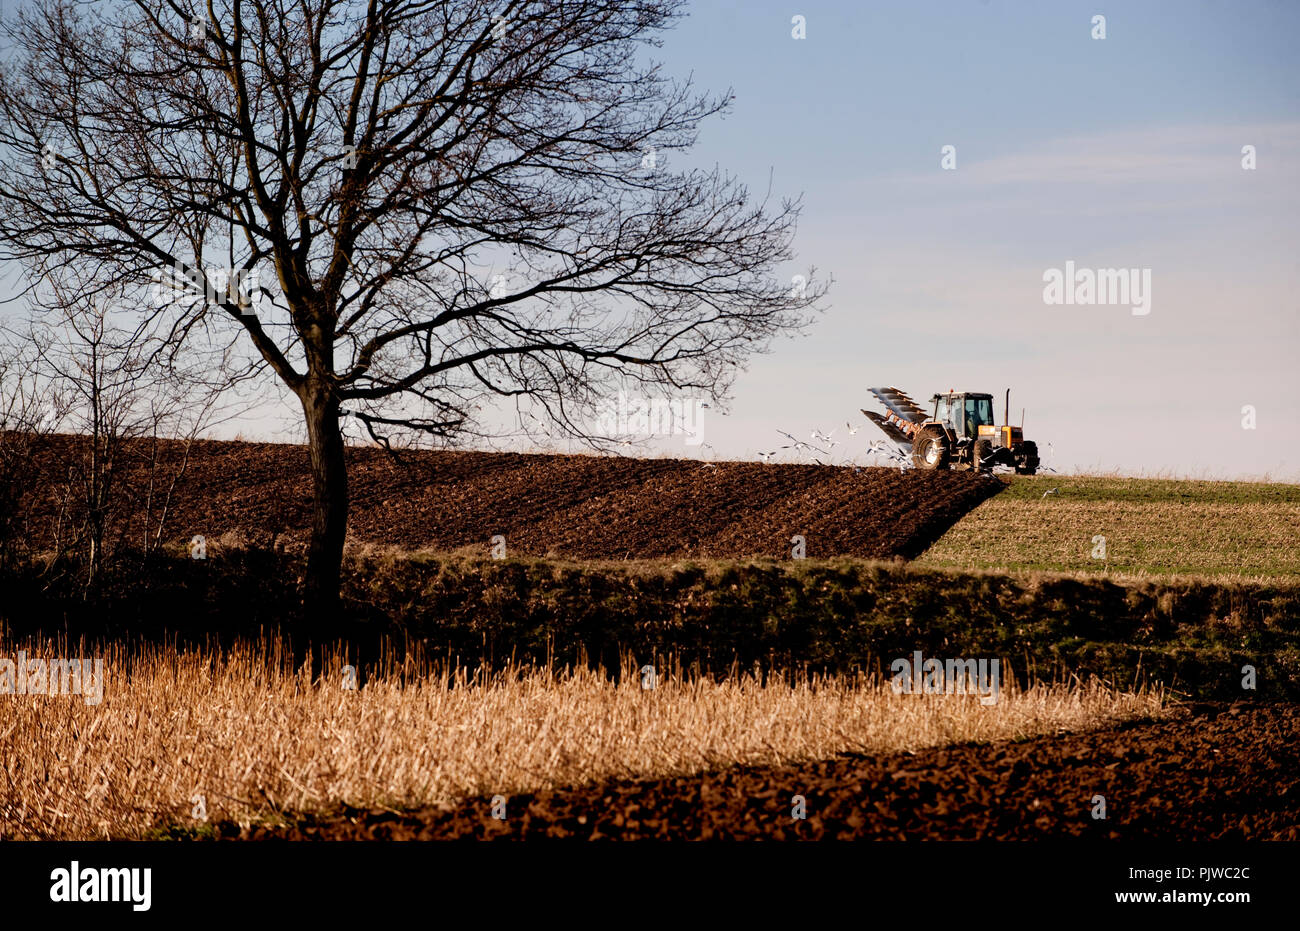 Landbouwer hi-res stock photography and images - Alamy